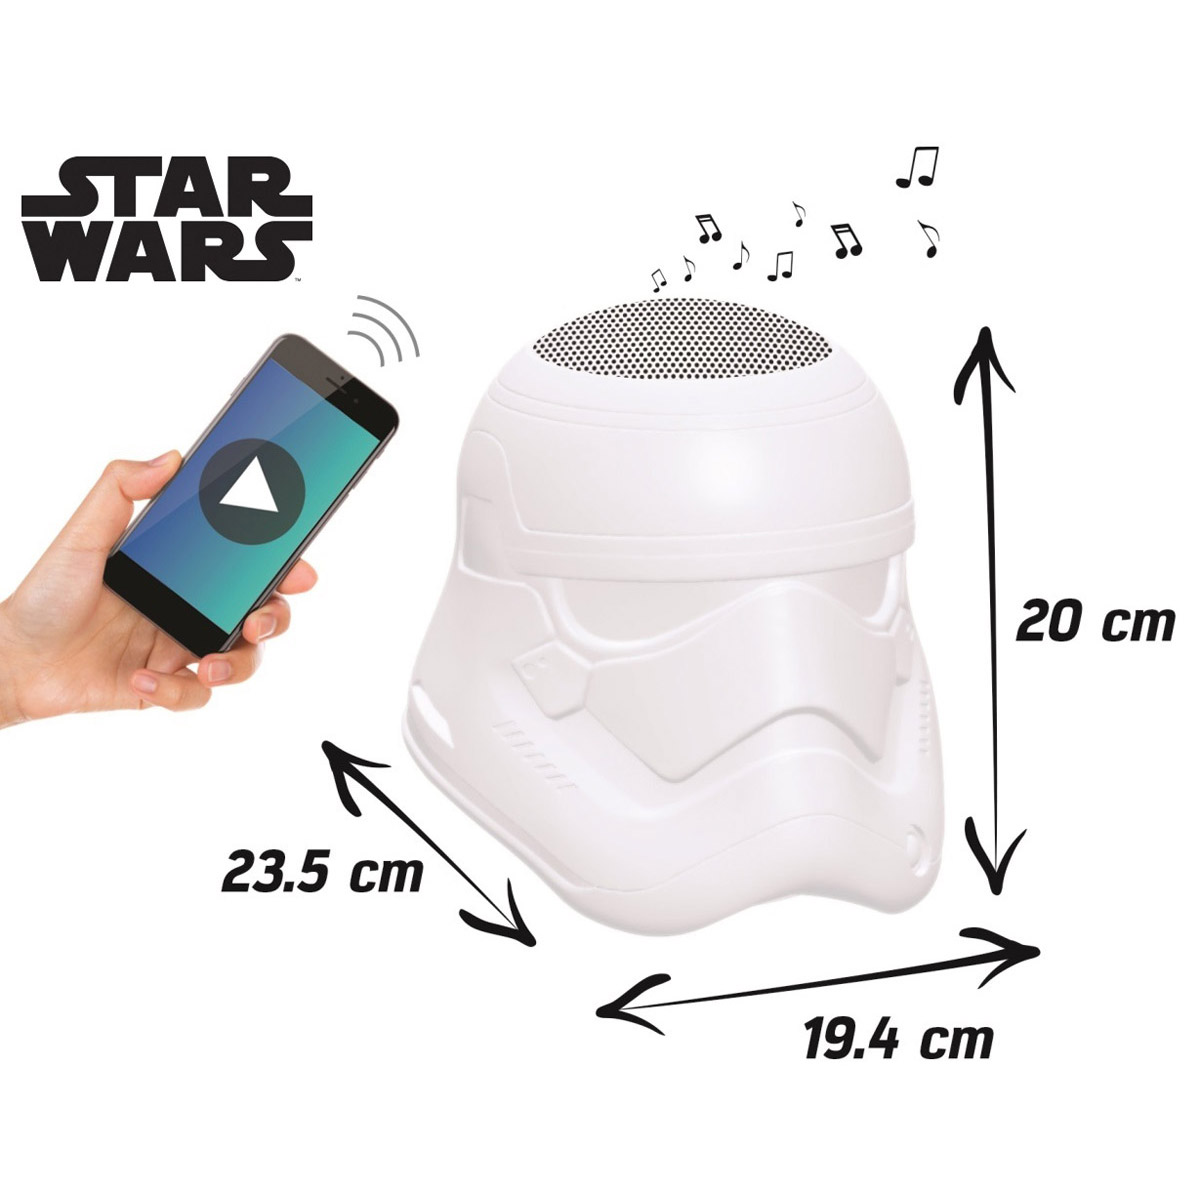 Stormtrooper Bluetooth Light Speaker, Star Wars, Colour Change